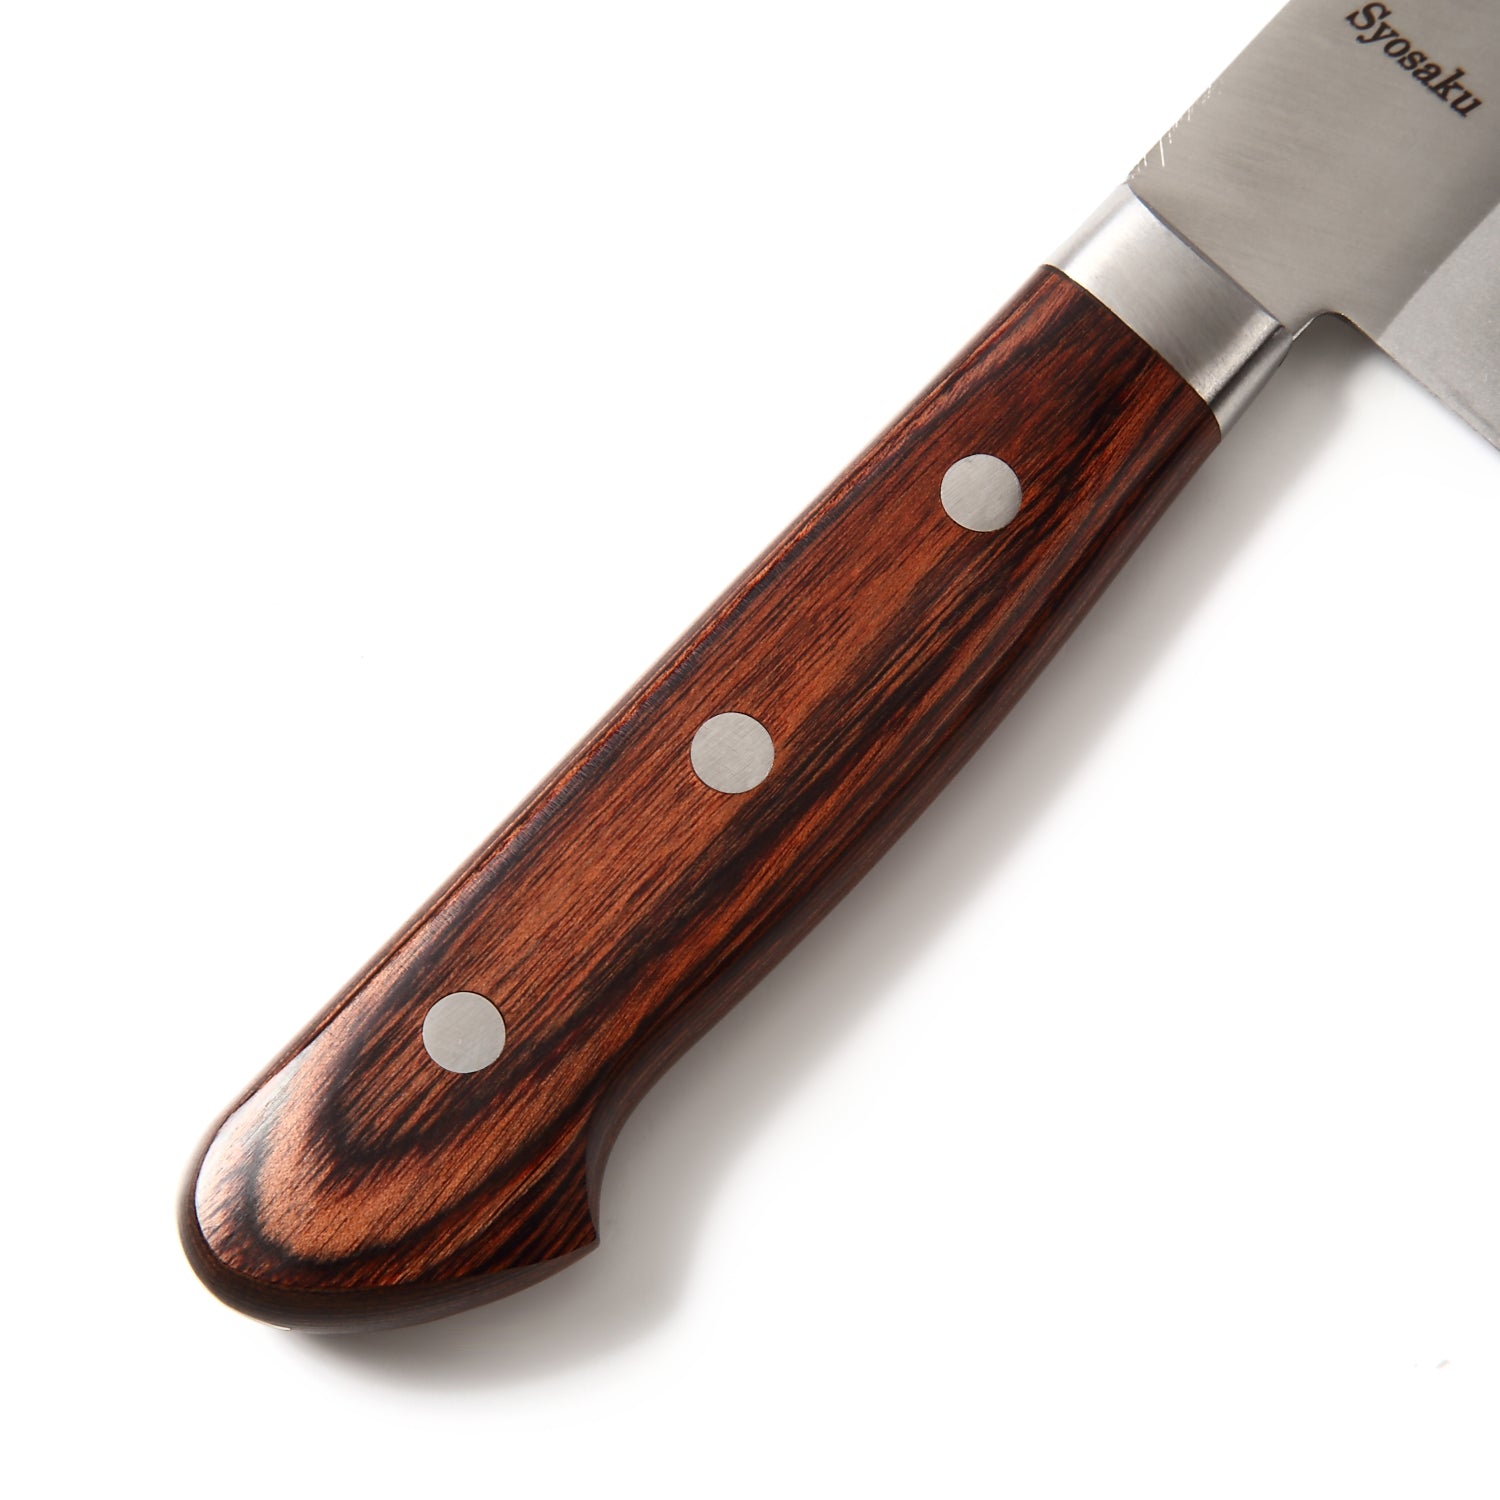 Crude Asian Nakiri Kitchen Chef Knife, Super Sharp, Thin Blade